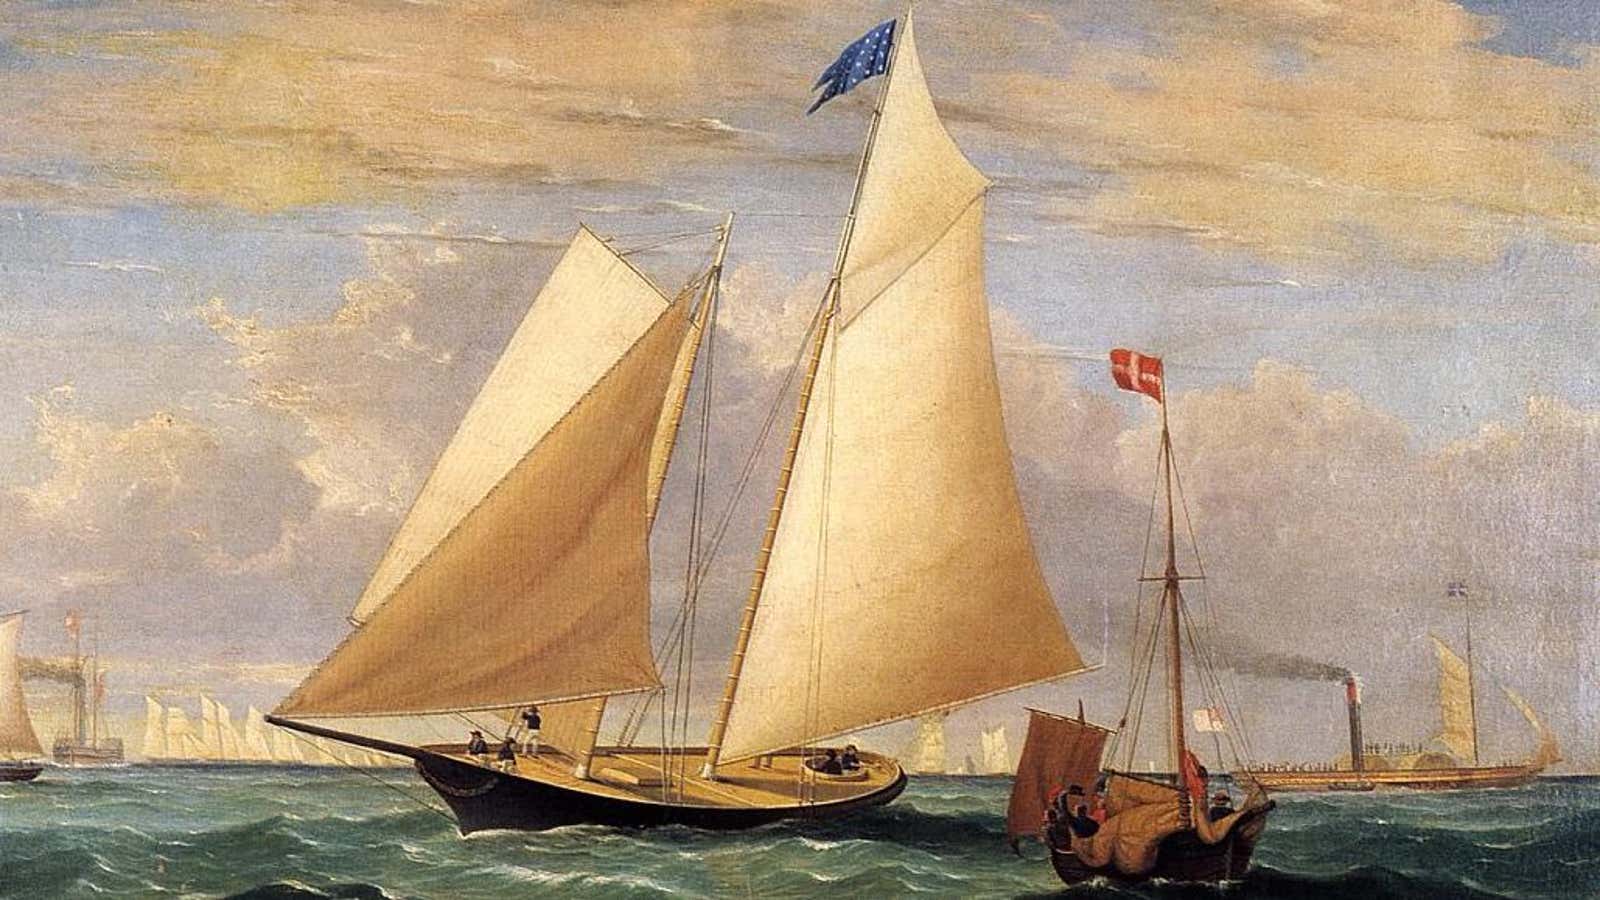 The Yacht “America” Winning the International Race, by Fitz Henry Lane, 1851